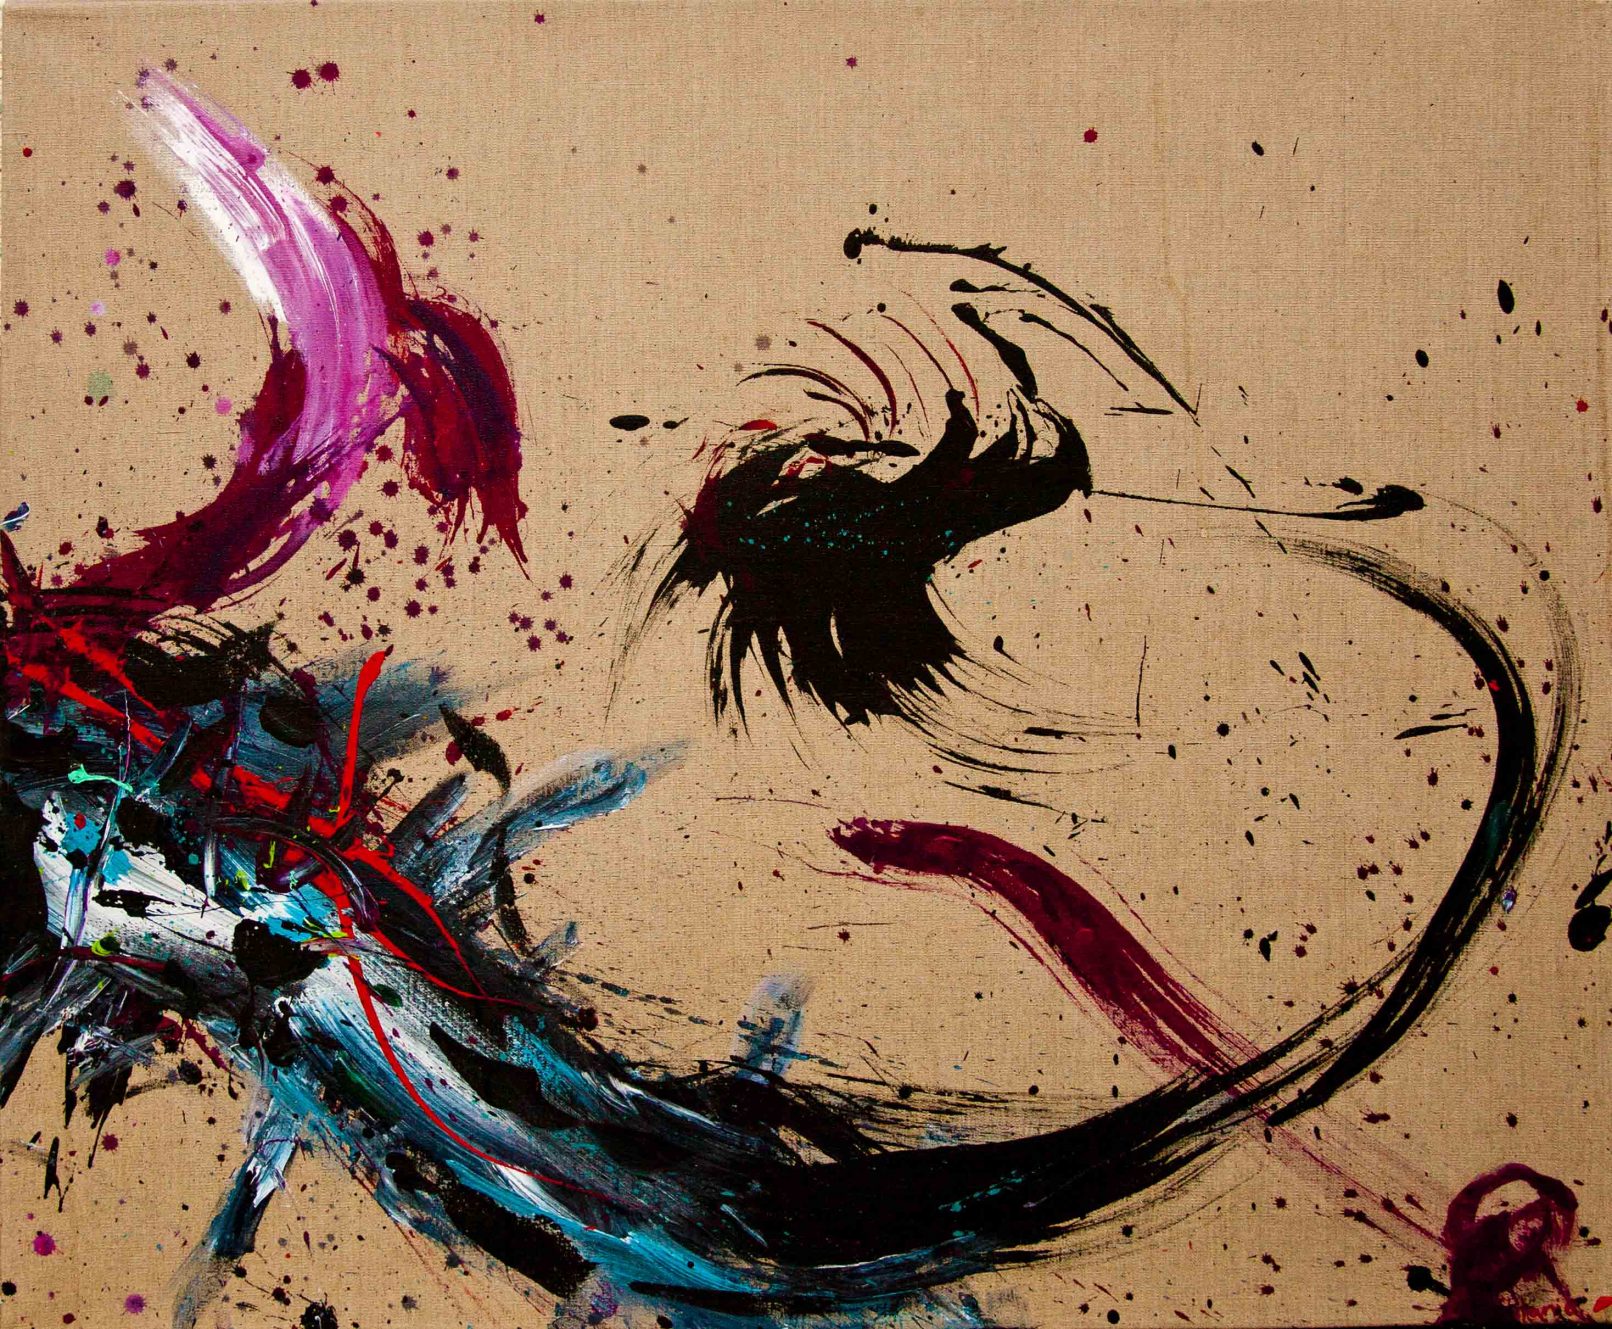 Dragon Tongue, 120 x 100, acrylic on canvas, 2011.